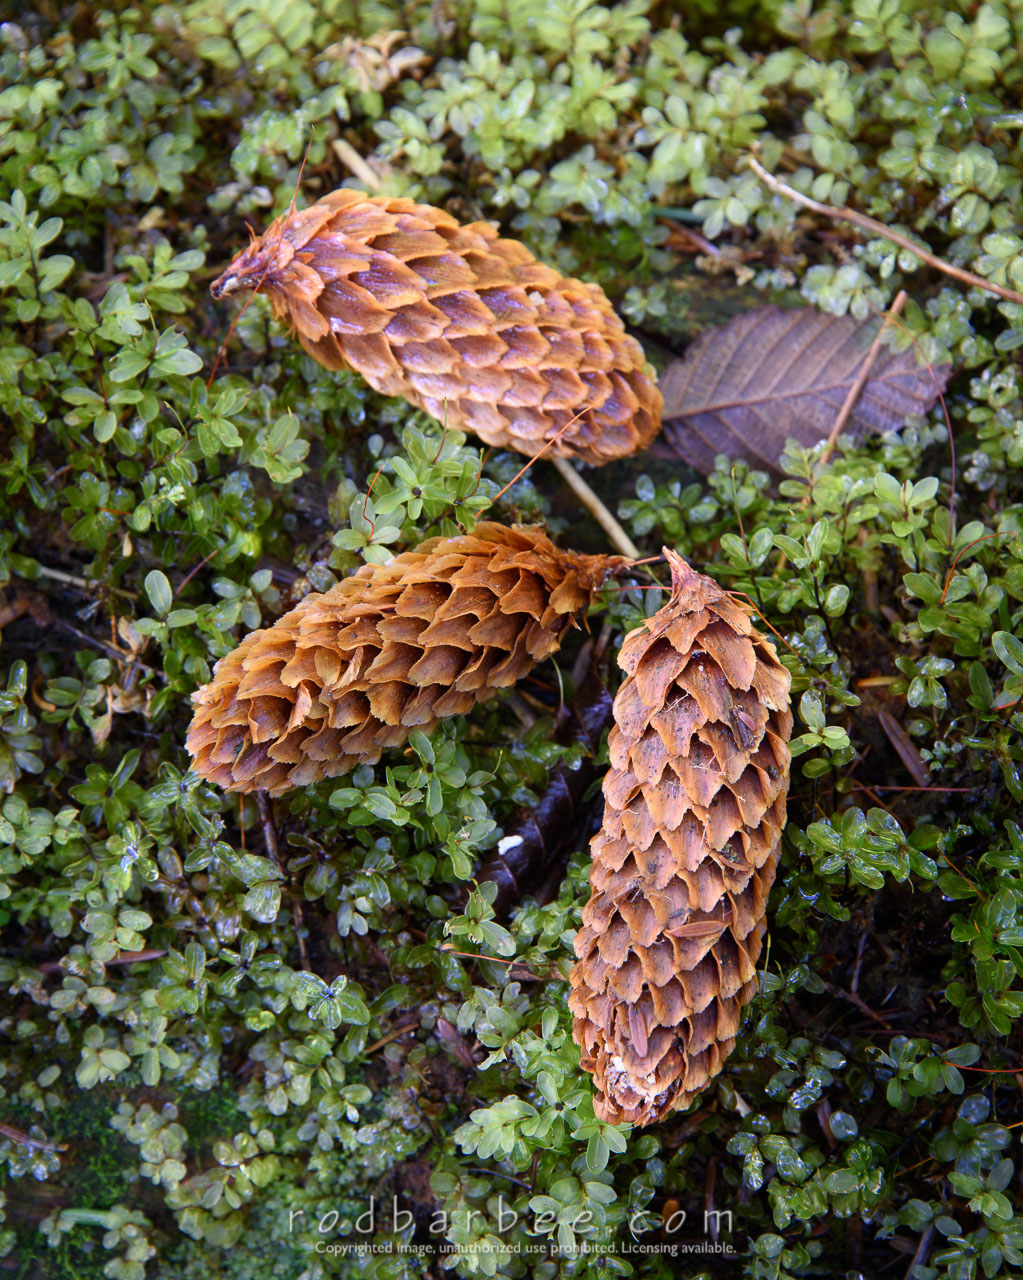 Barbee_150809_3957 |  Spruce cones on mossy log. Forest floor detail. Sitka, Alaska